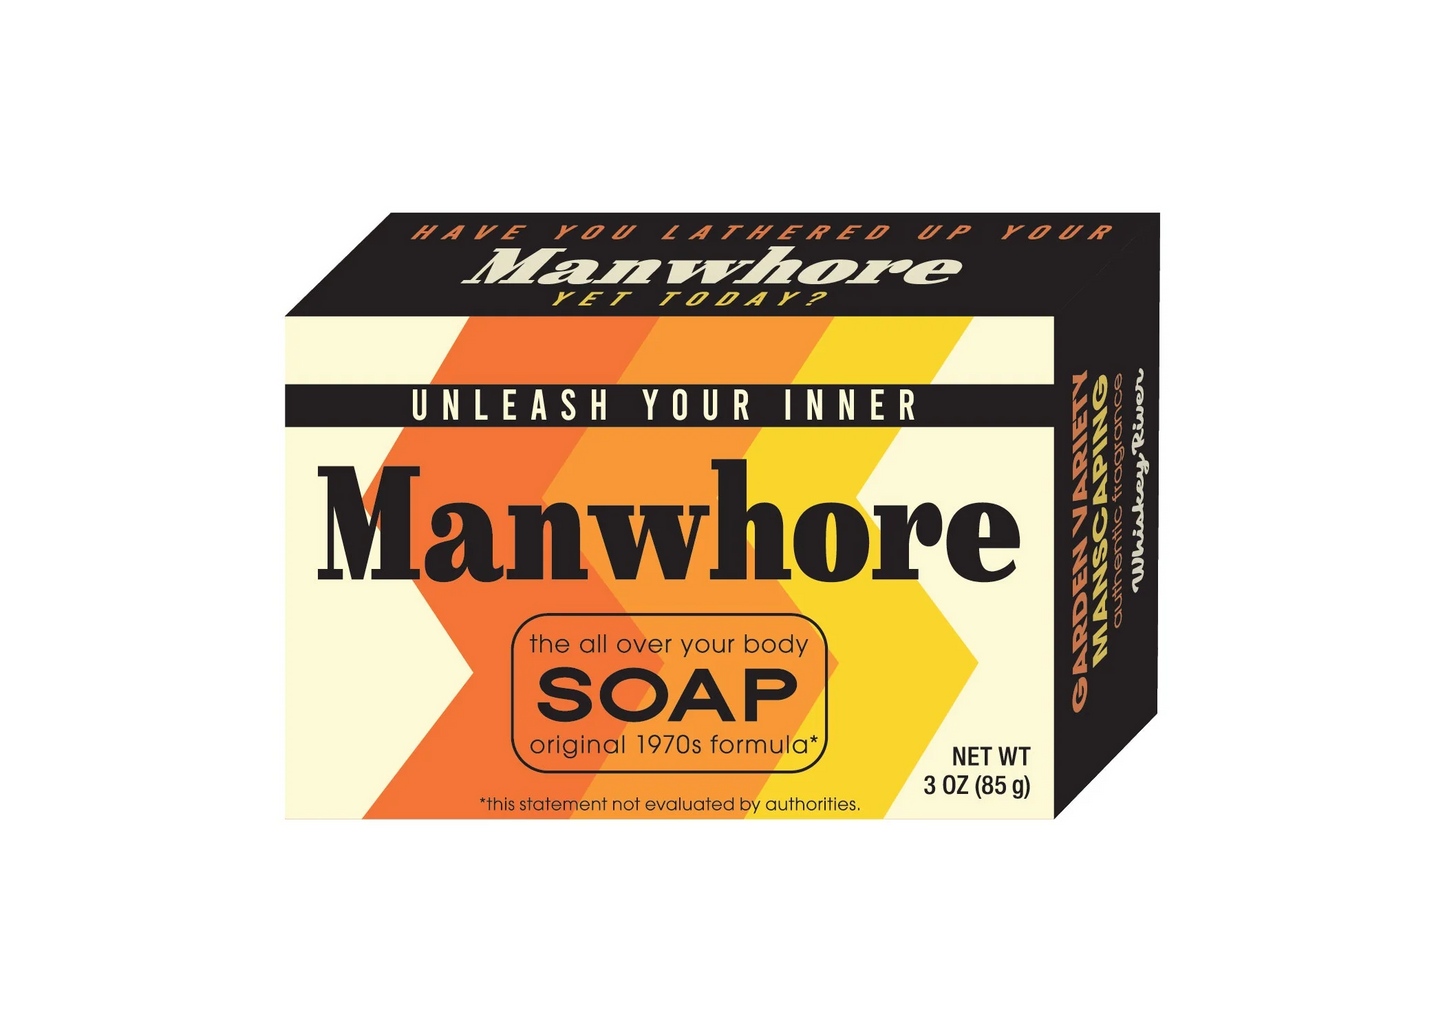 Manwhore Bar Soap